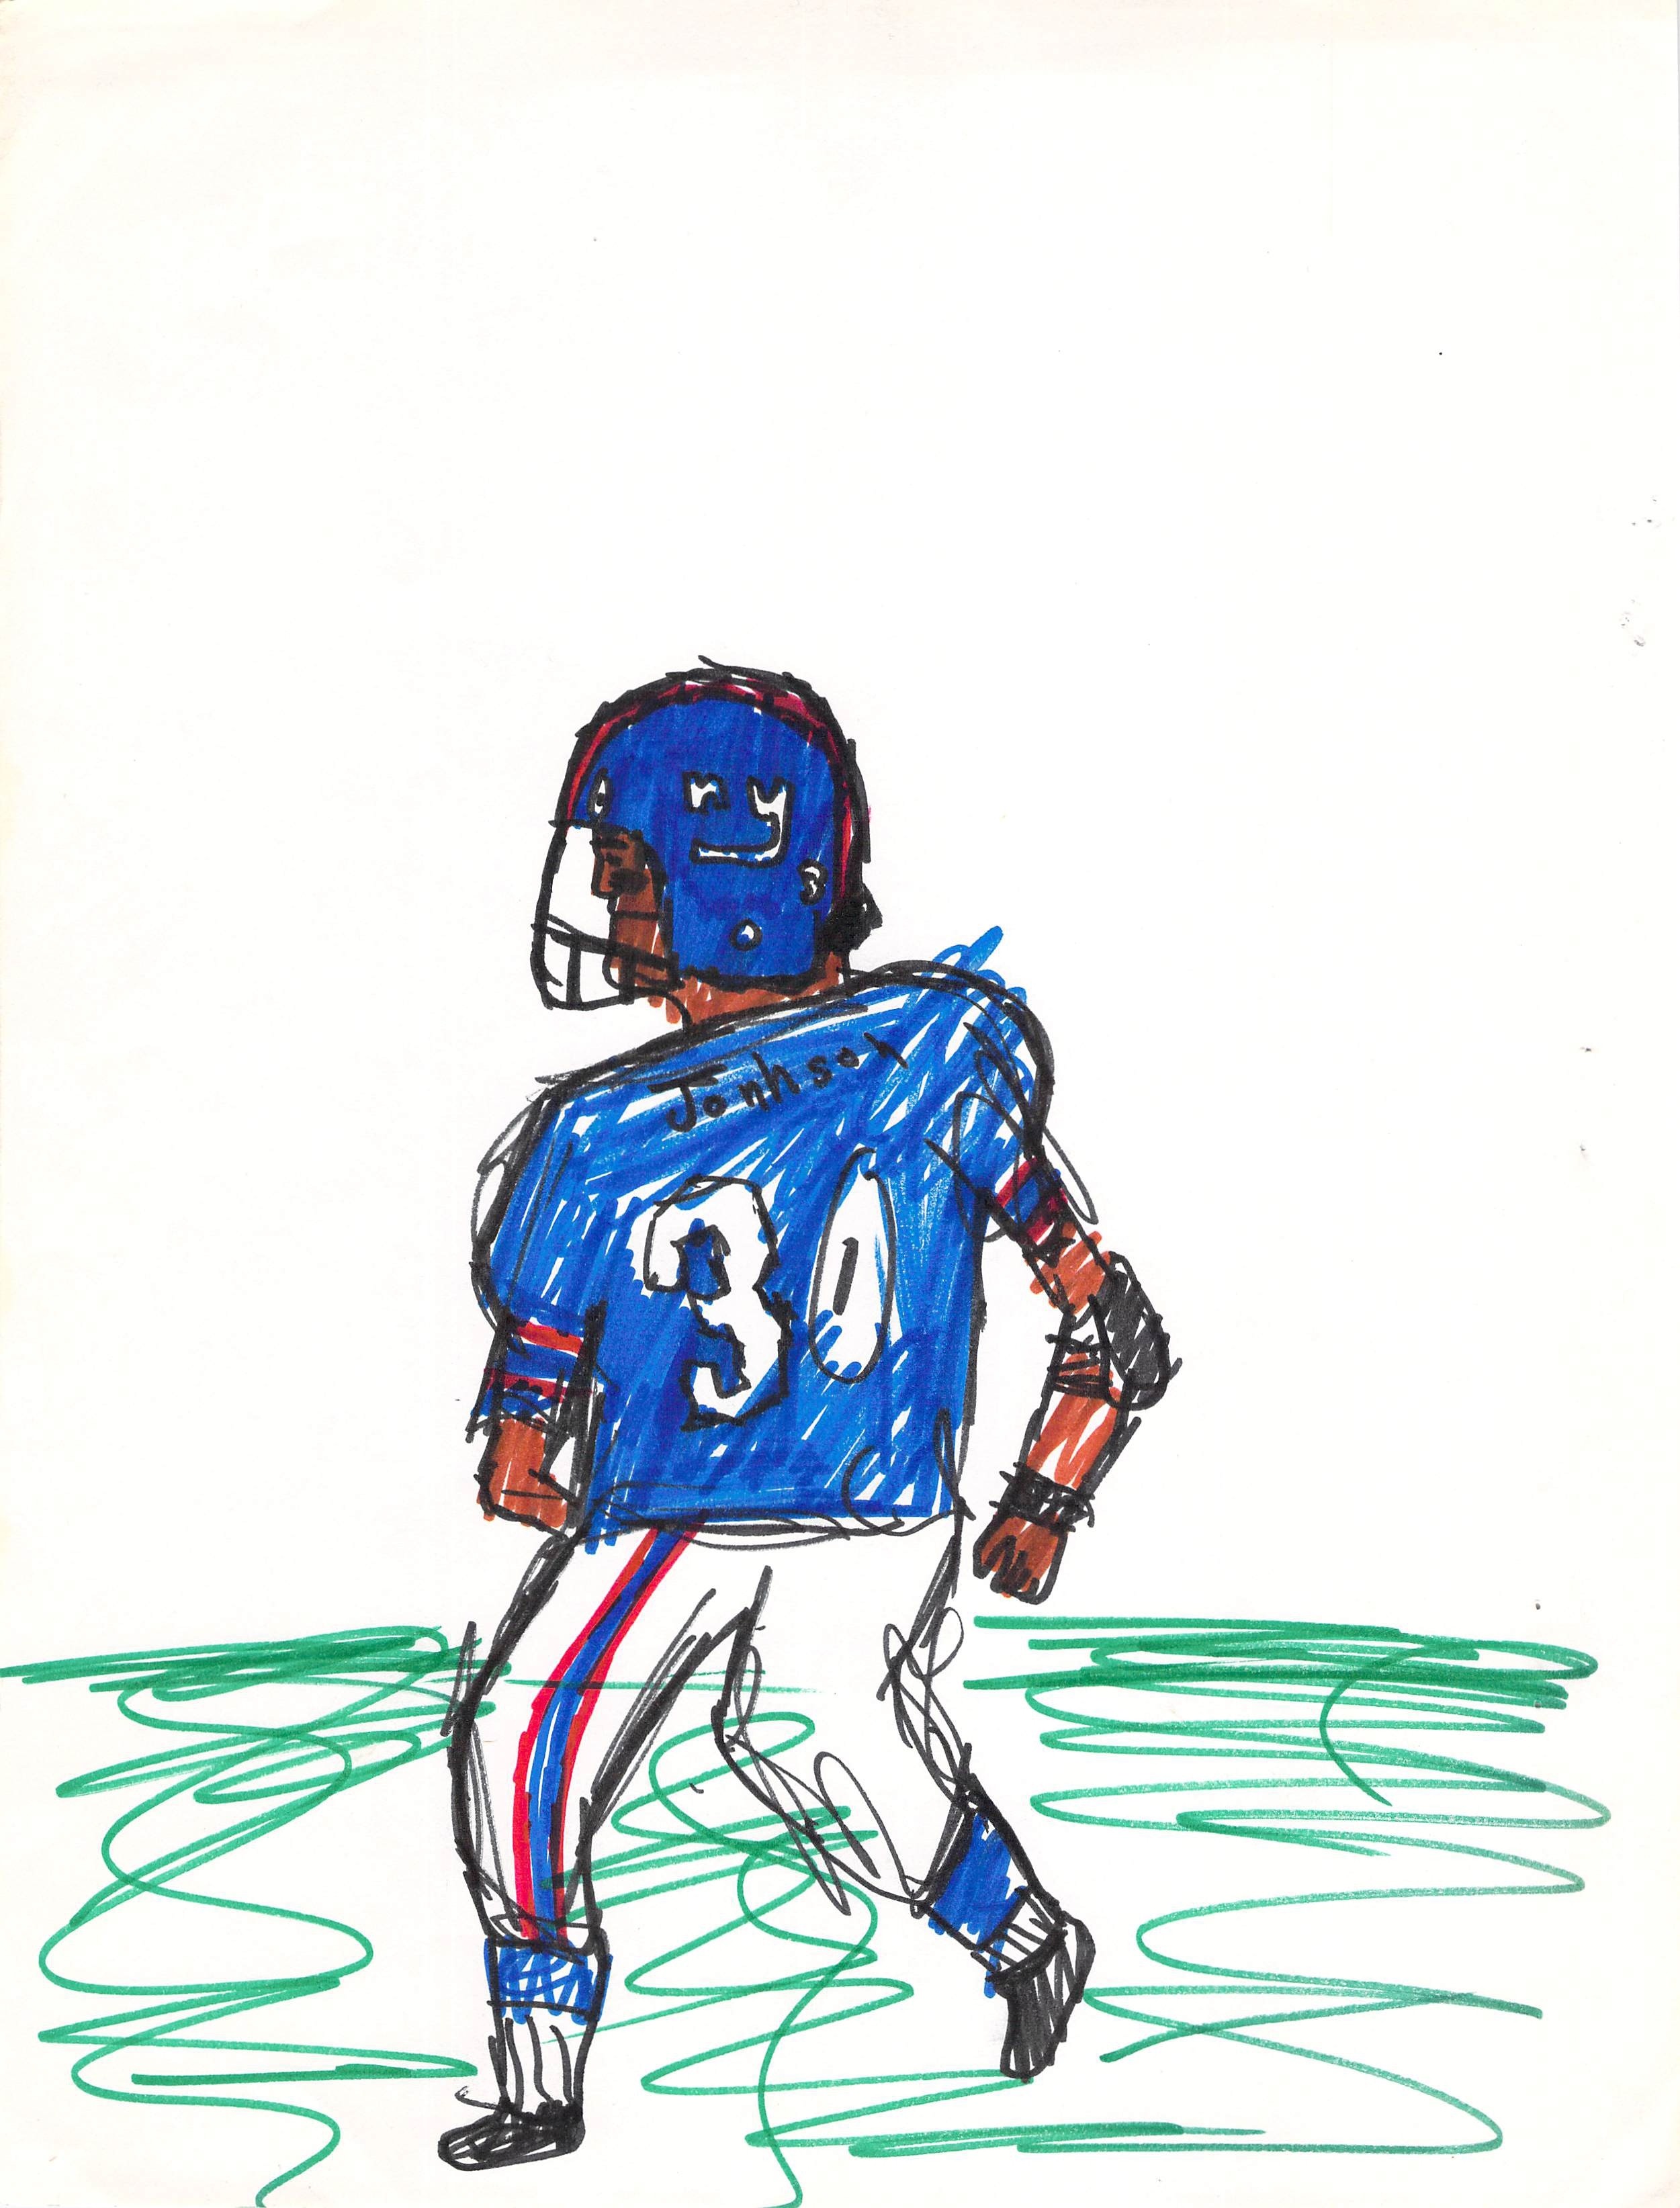 Sketch, Art, Portrait, Football, New York Giants